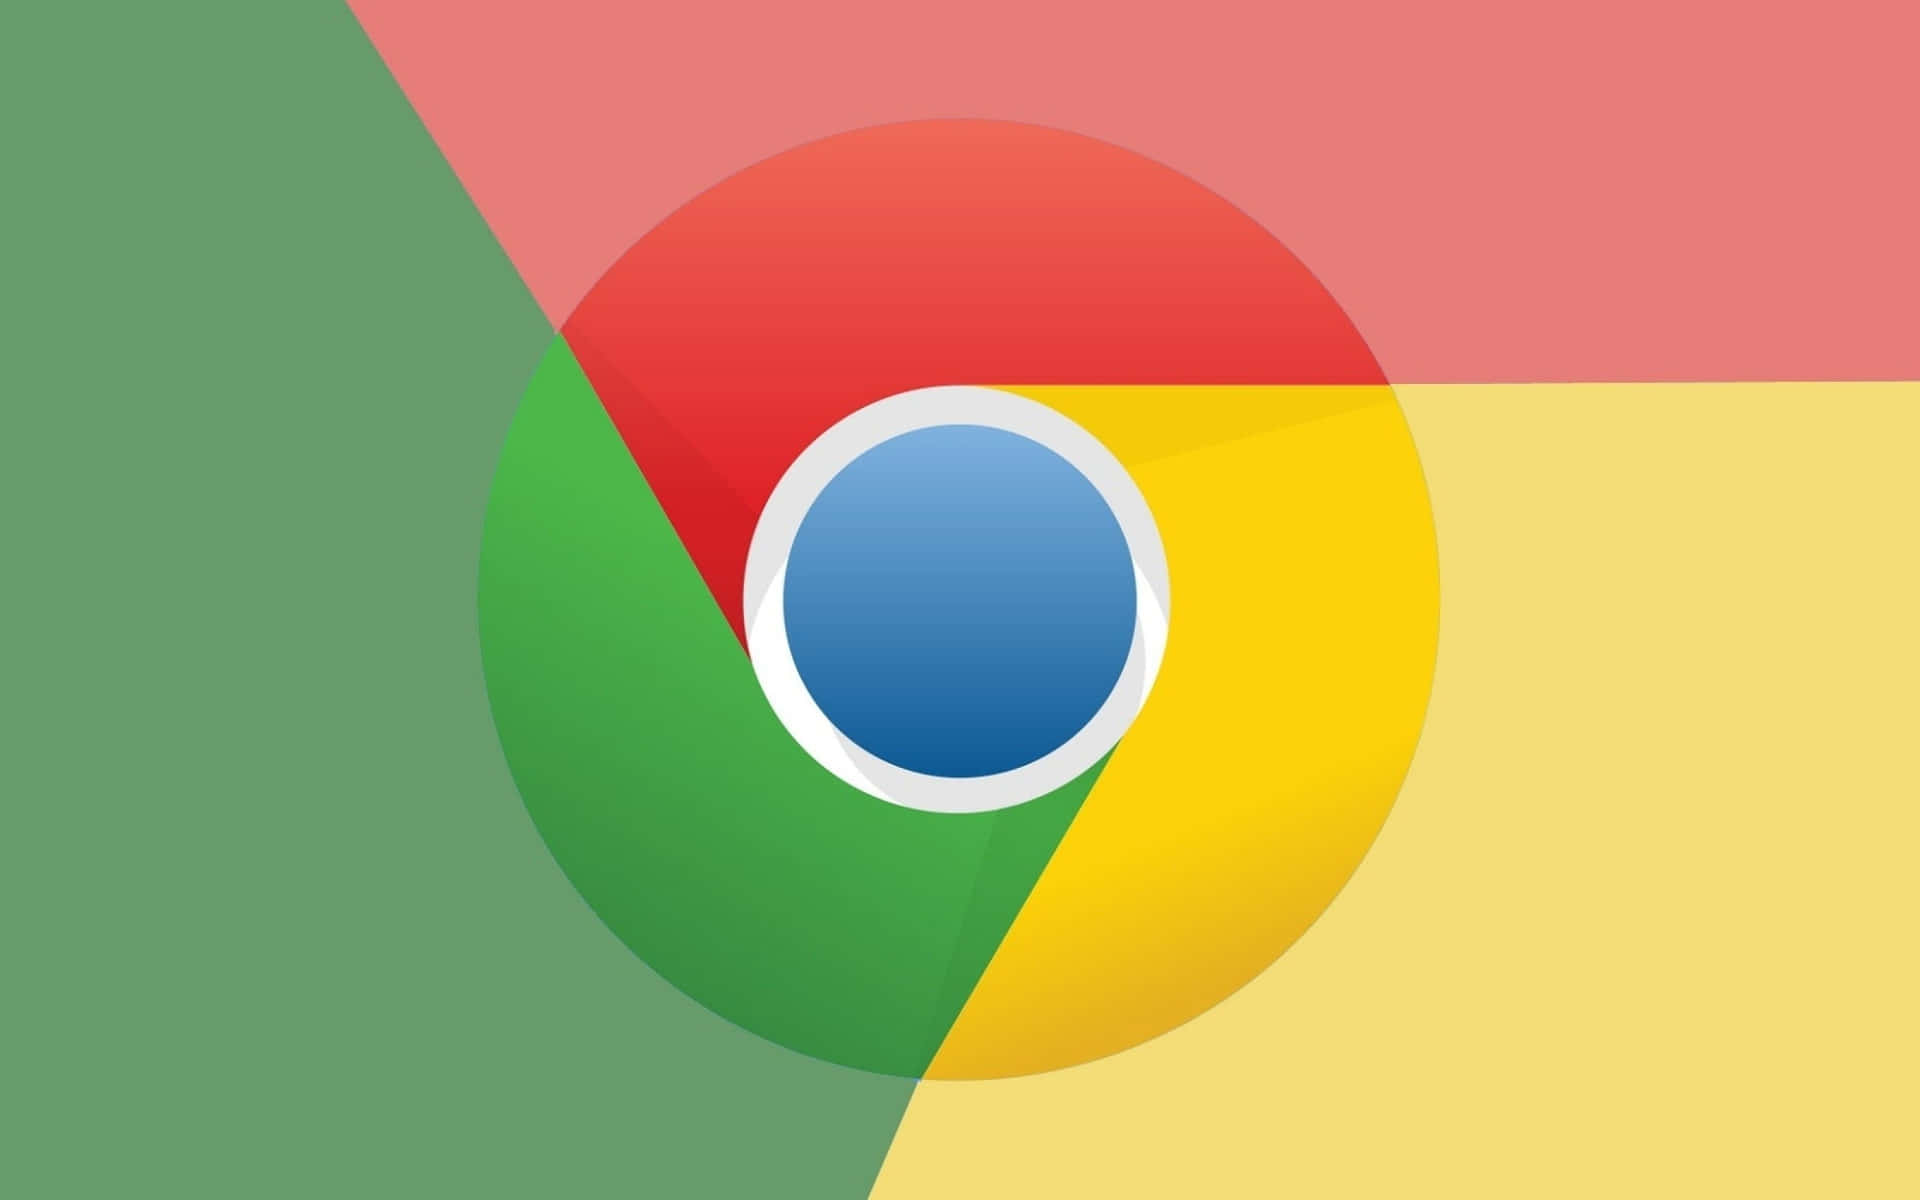 Popular web browser Google Chrome